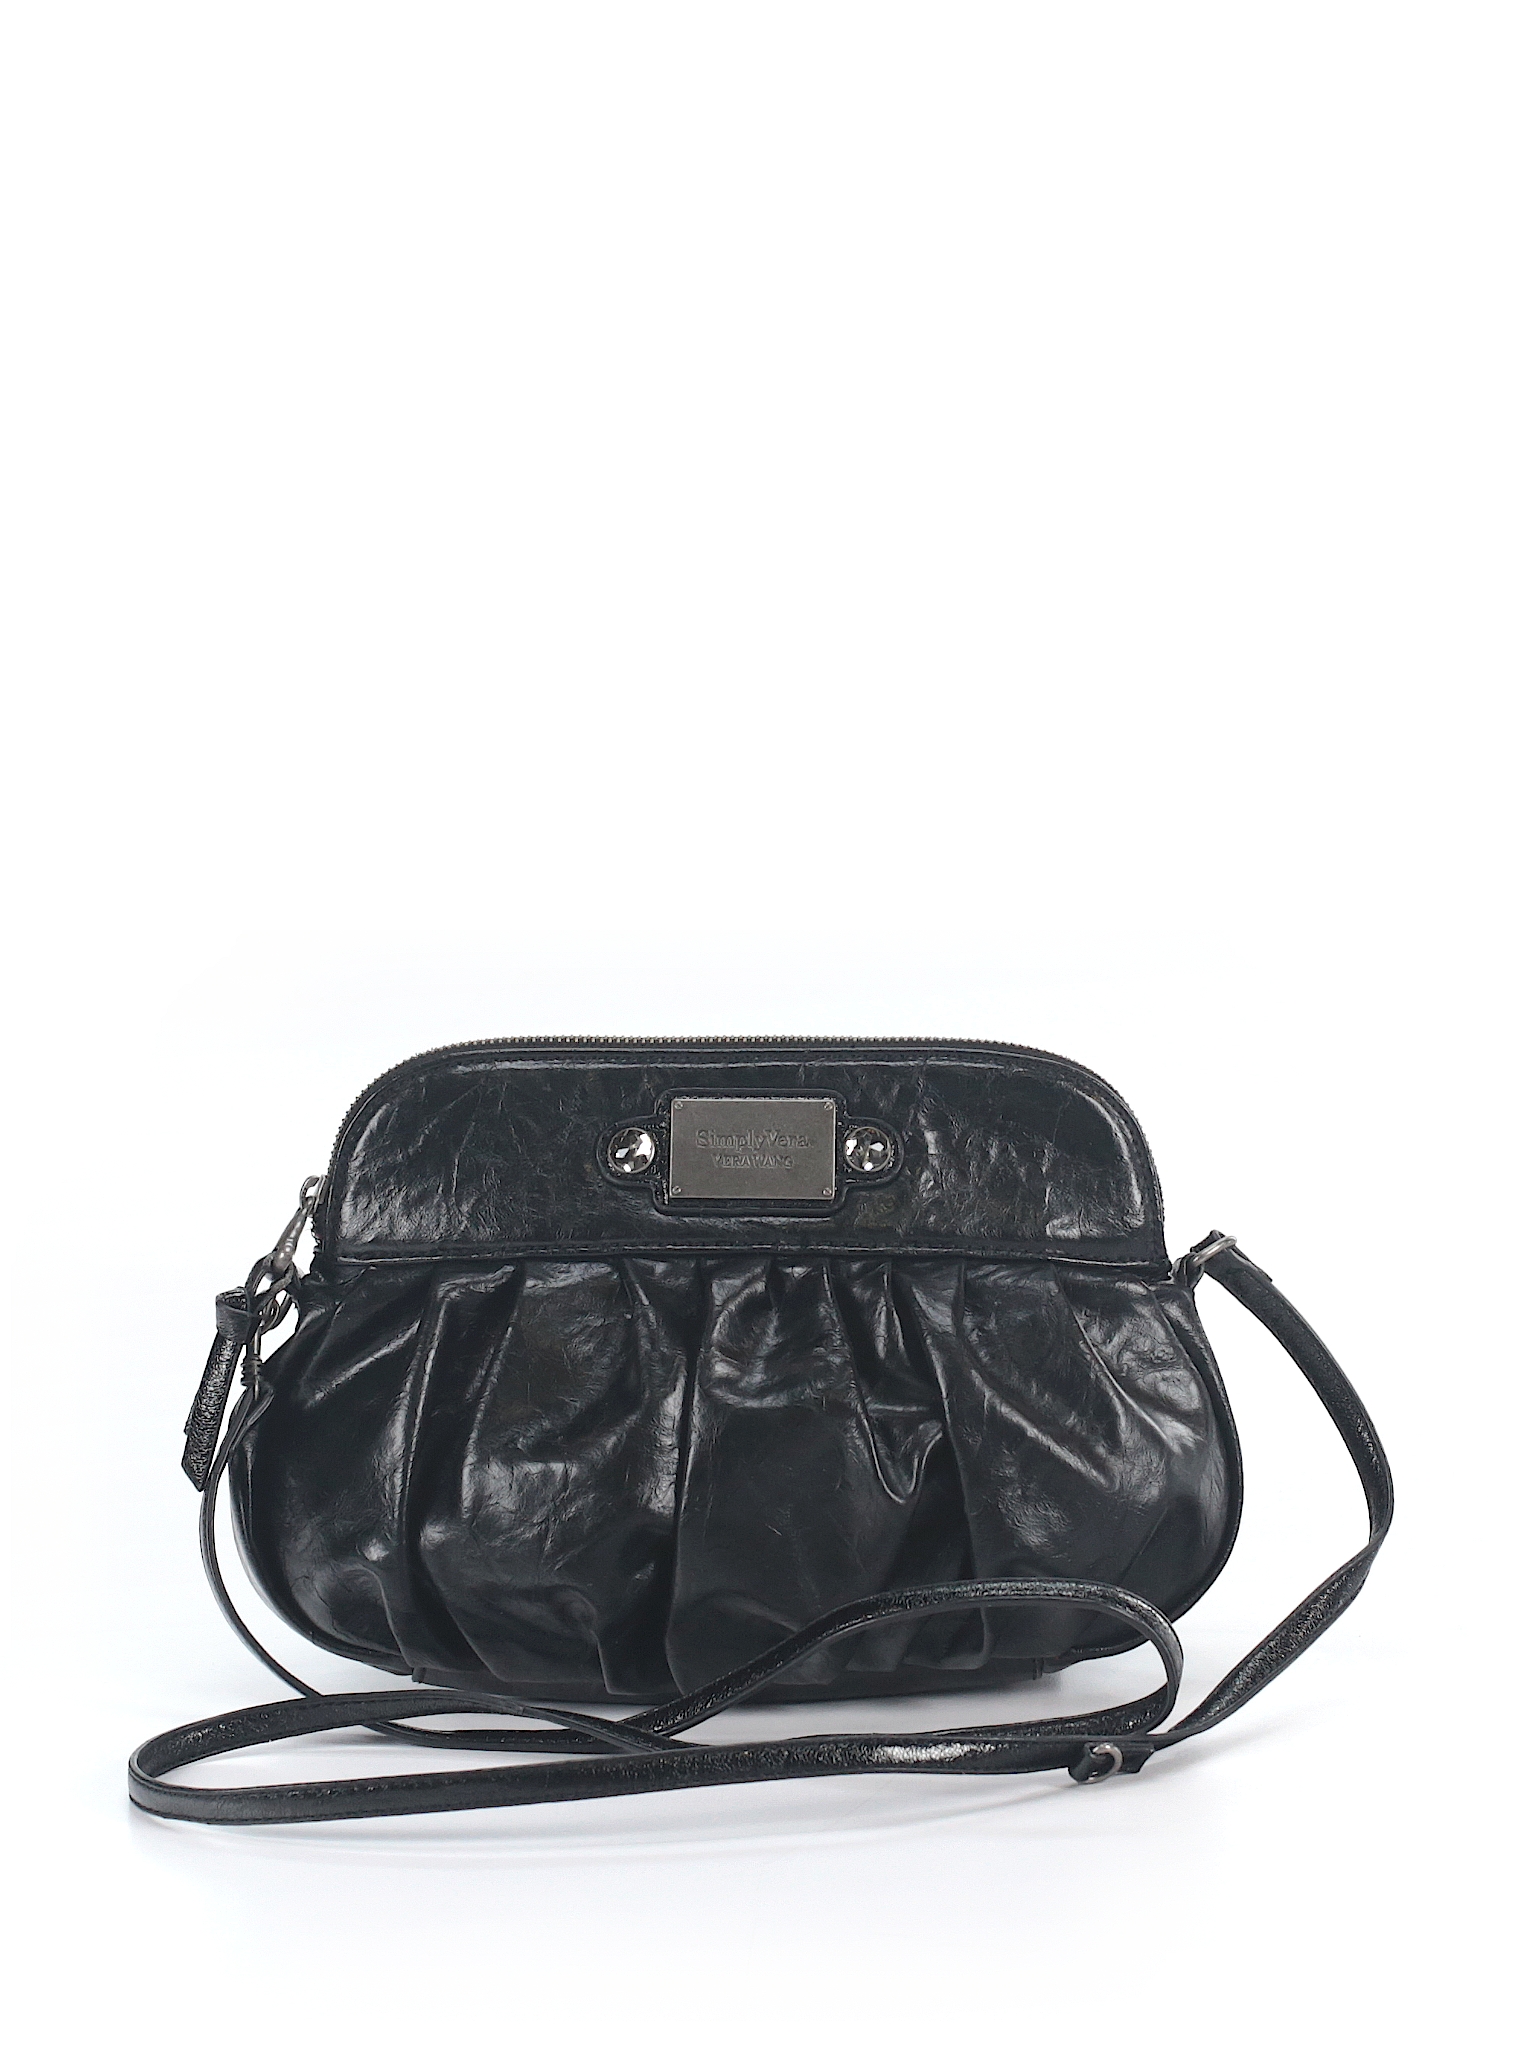 Simply Vera Vera Wang Solid Black Crossbody Bag One Size - 55% off ...